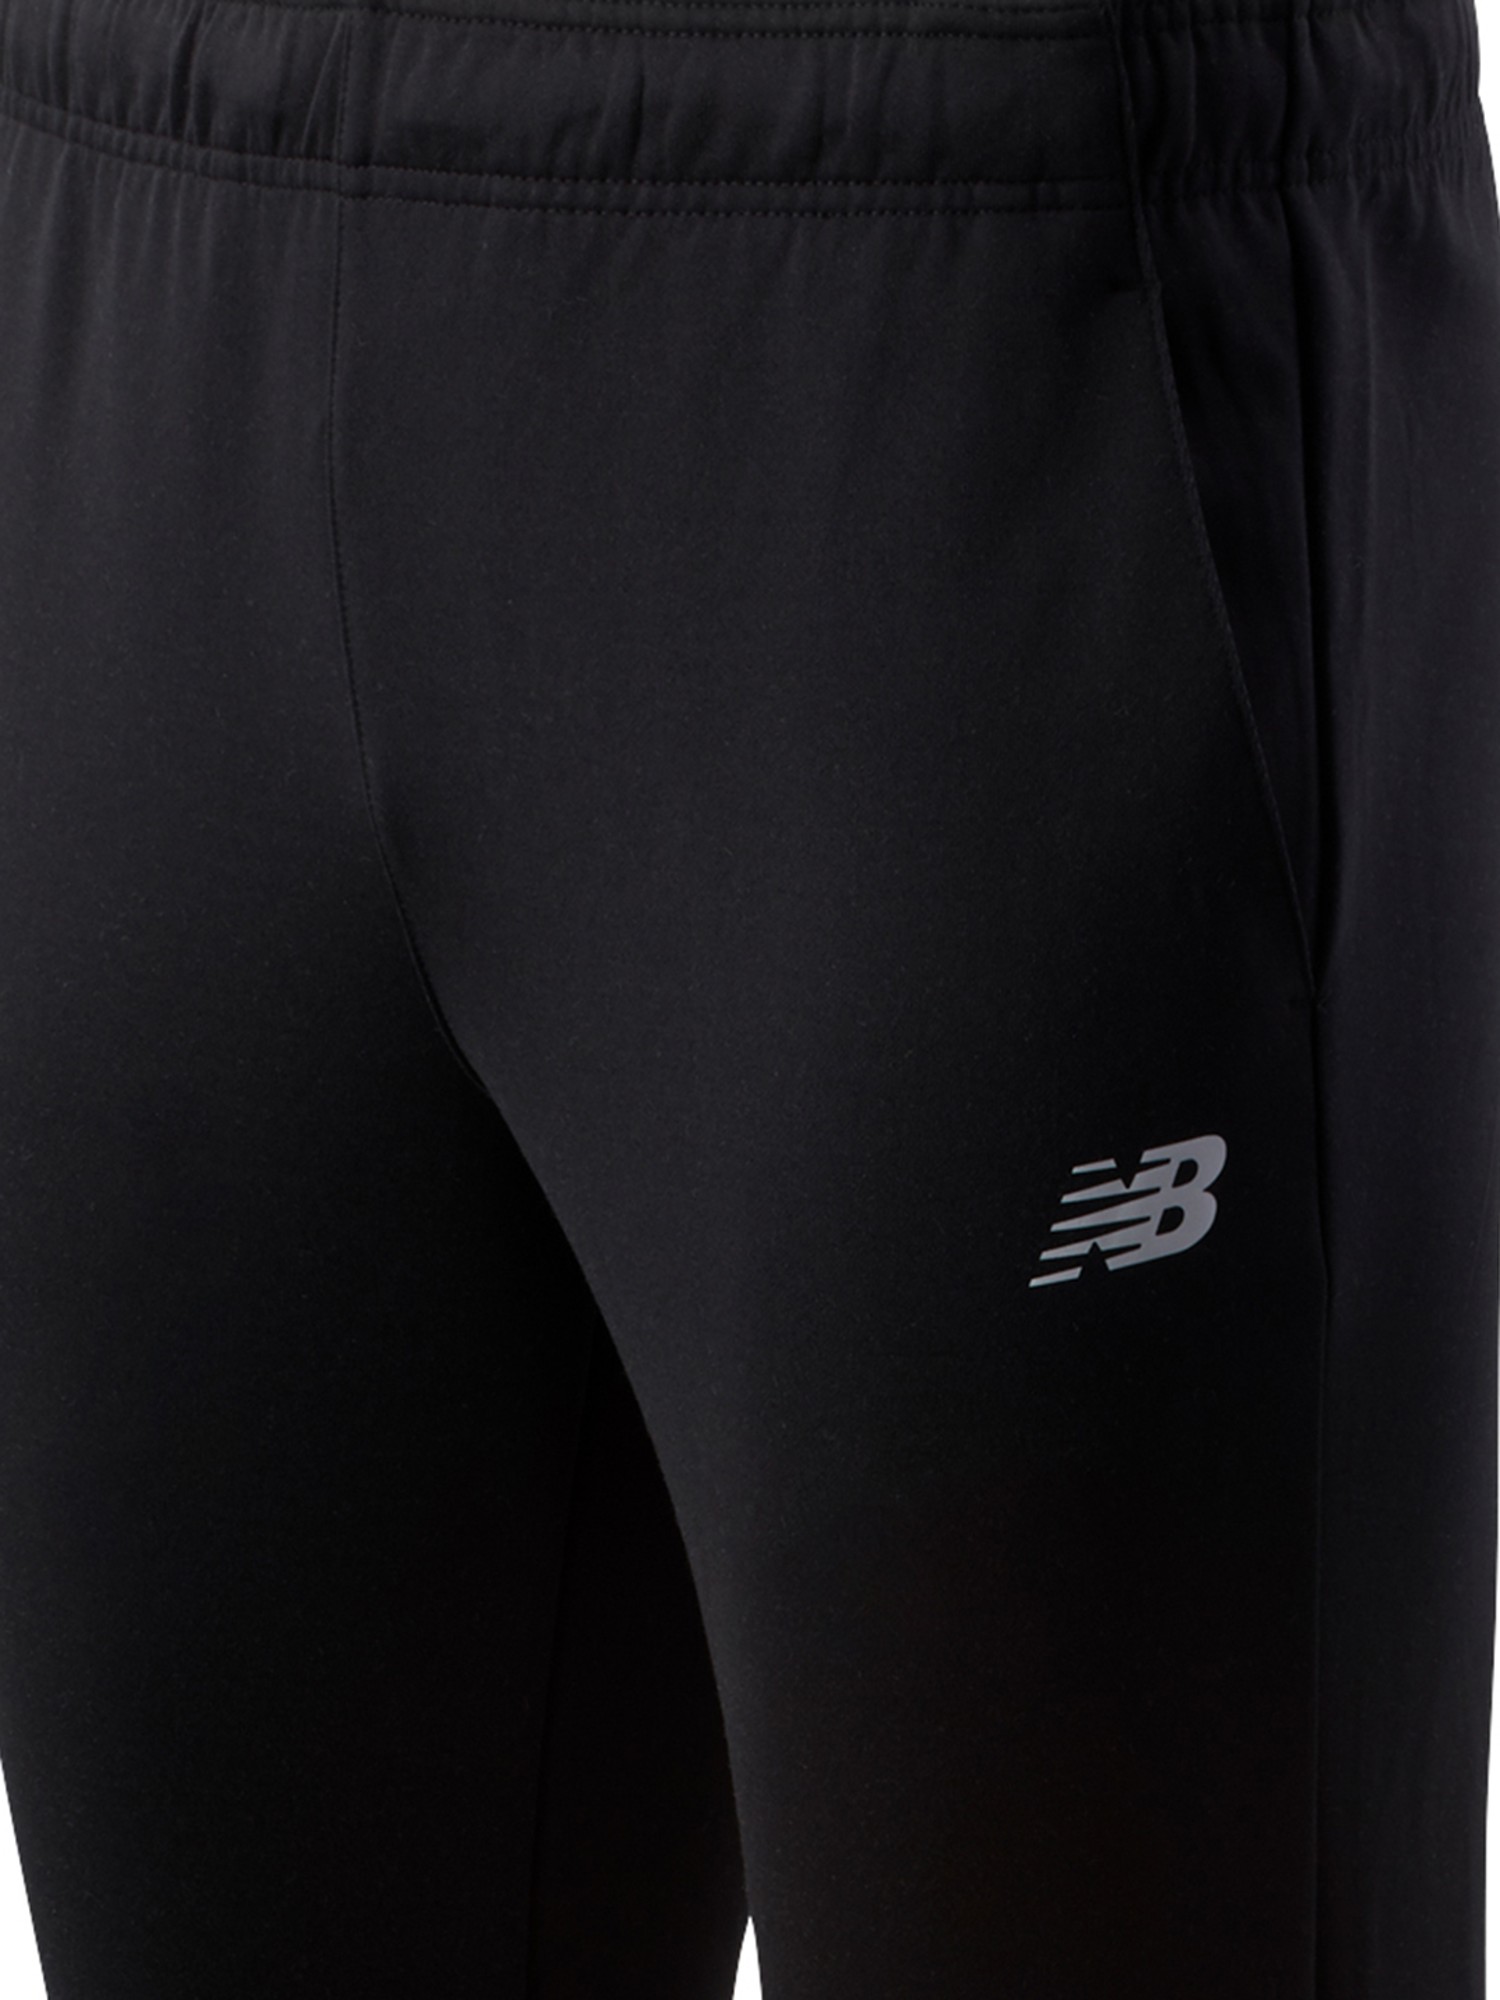 Shop New Balance Unisex Street Style Logo Joggers  Sweatpants by 愛与52   BUYMA